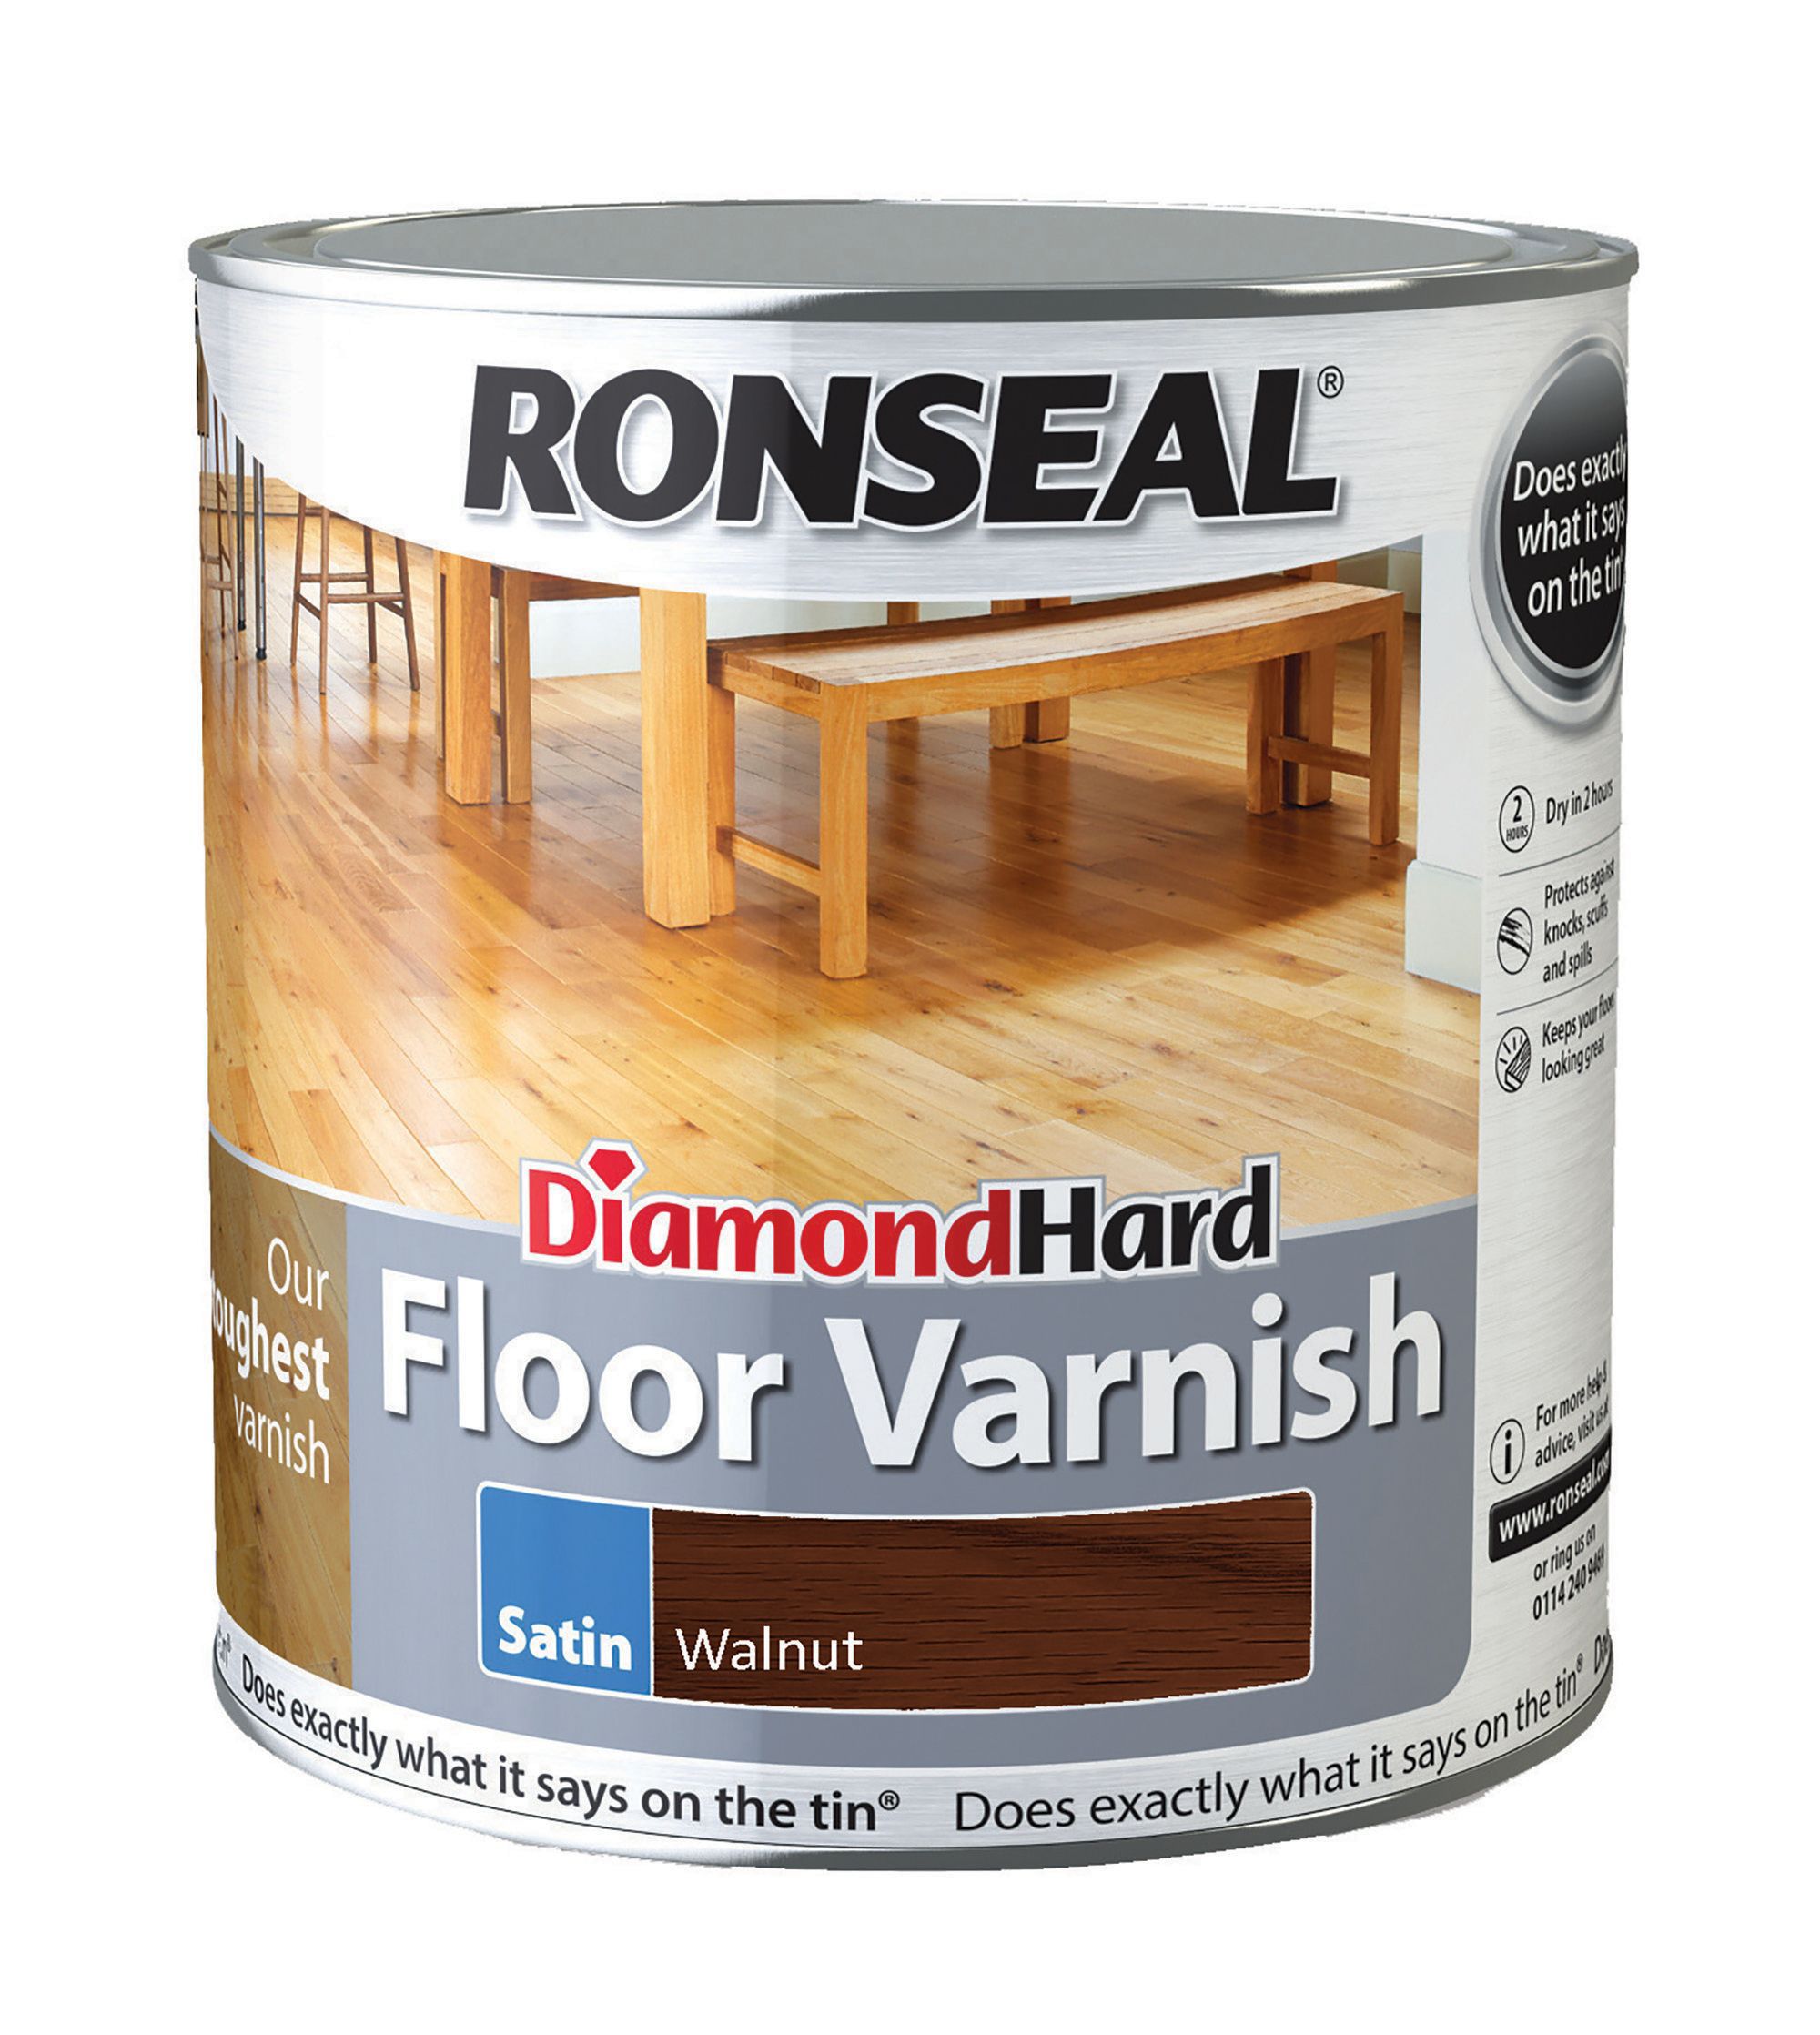 Ronseal Diamond Hard Floor Varnish Walnut Satin Wood Floor Varnish, 2.5L